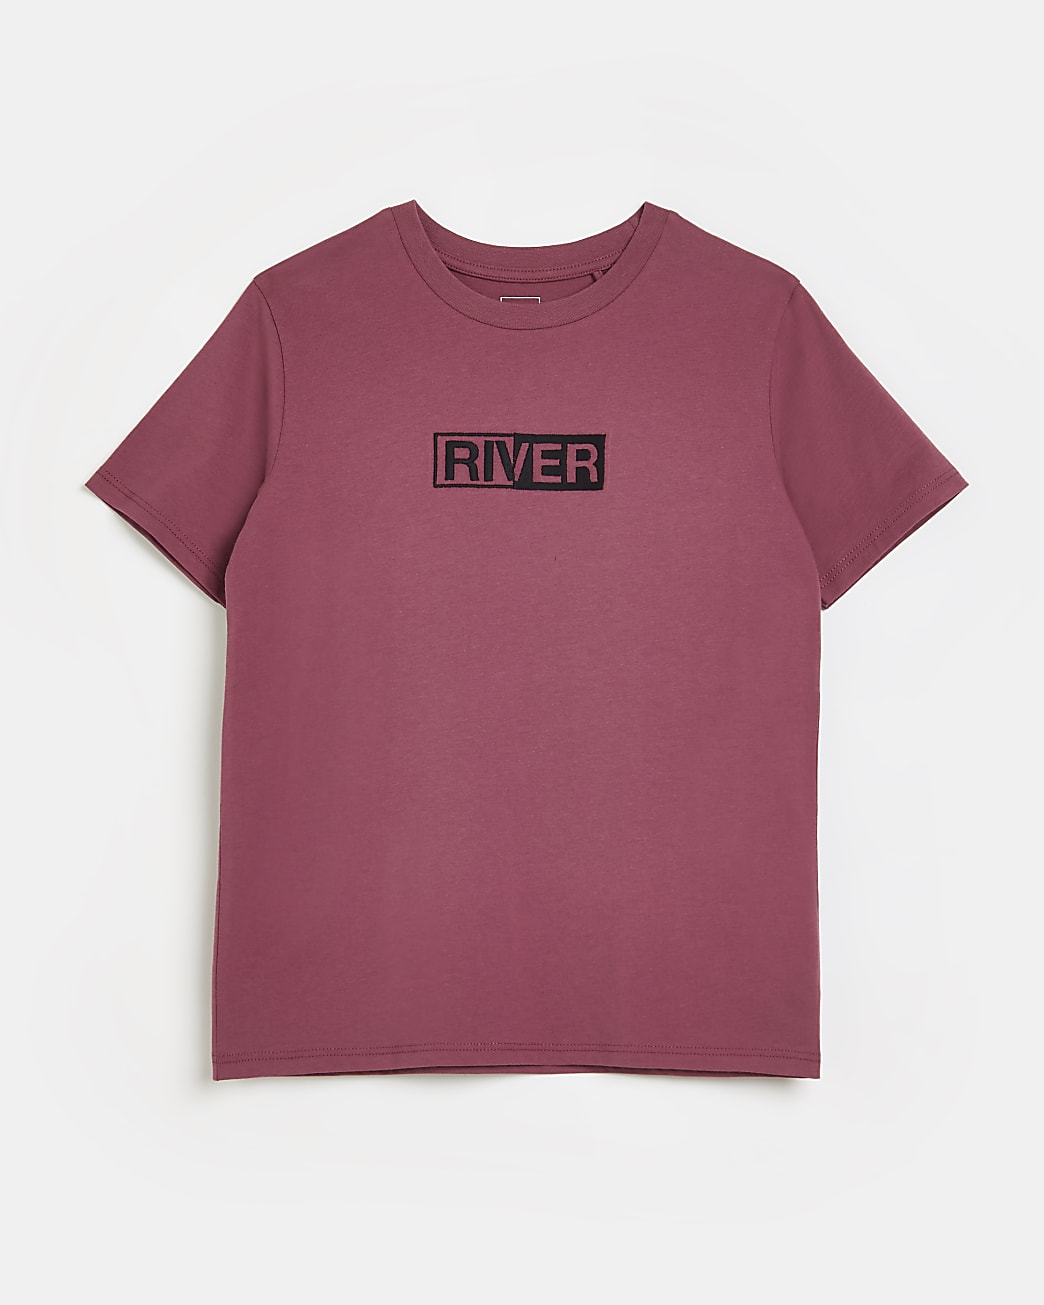 Boys purple River t-shirt